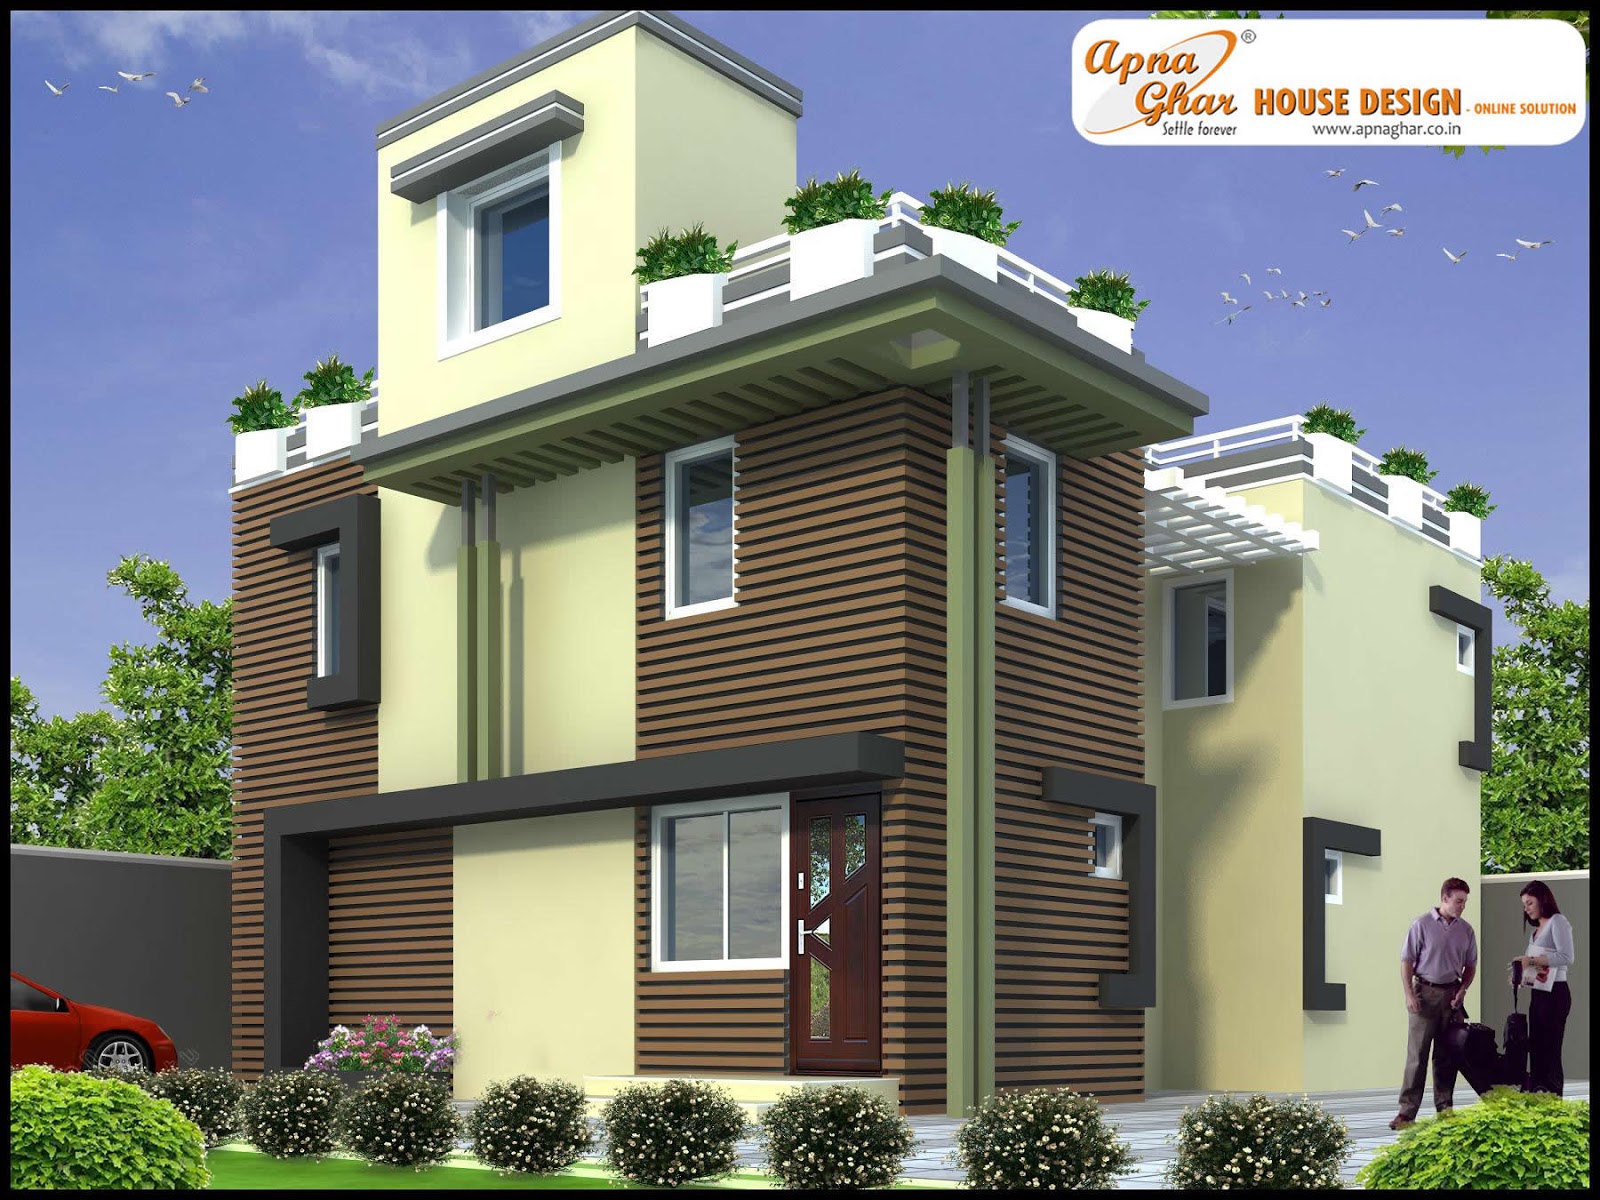 Duplex House Design  ApnaGhar House Design  Page 2